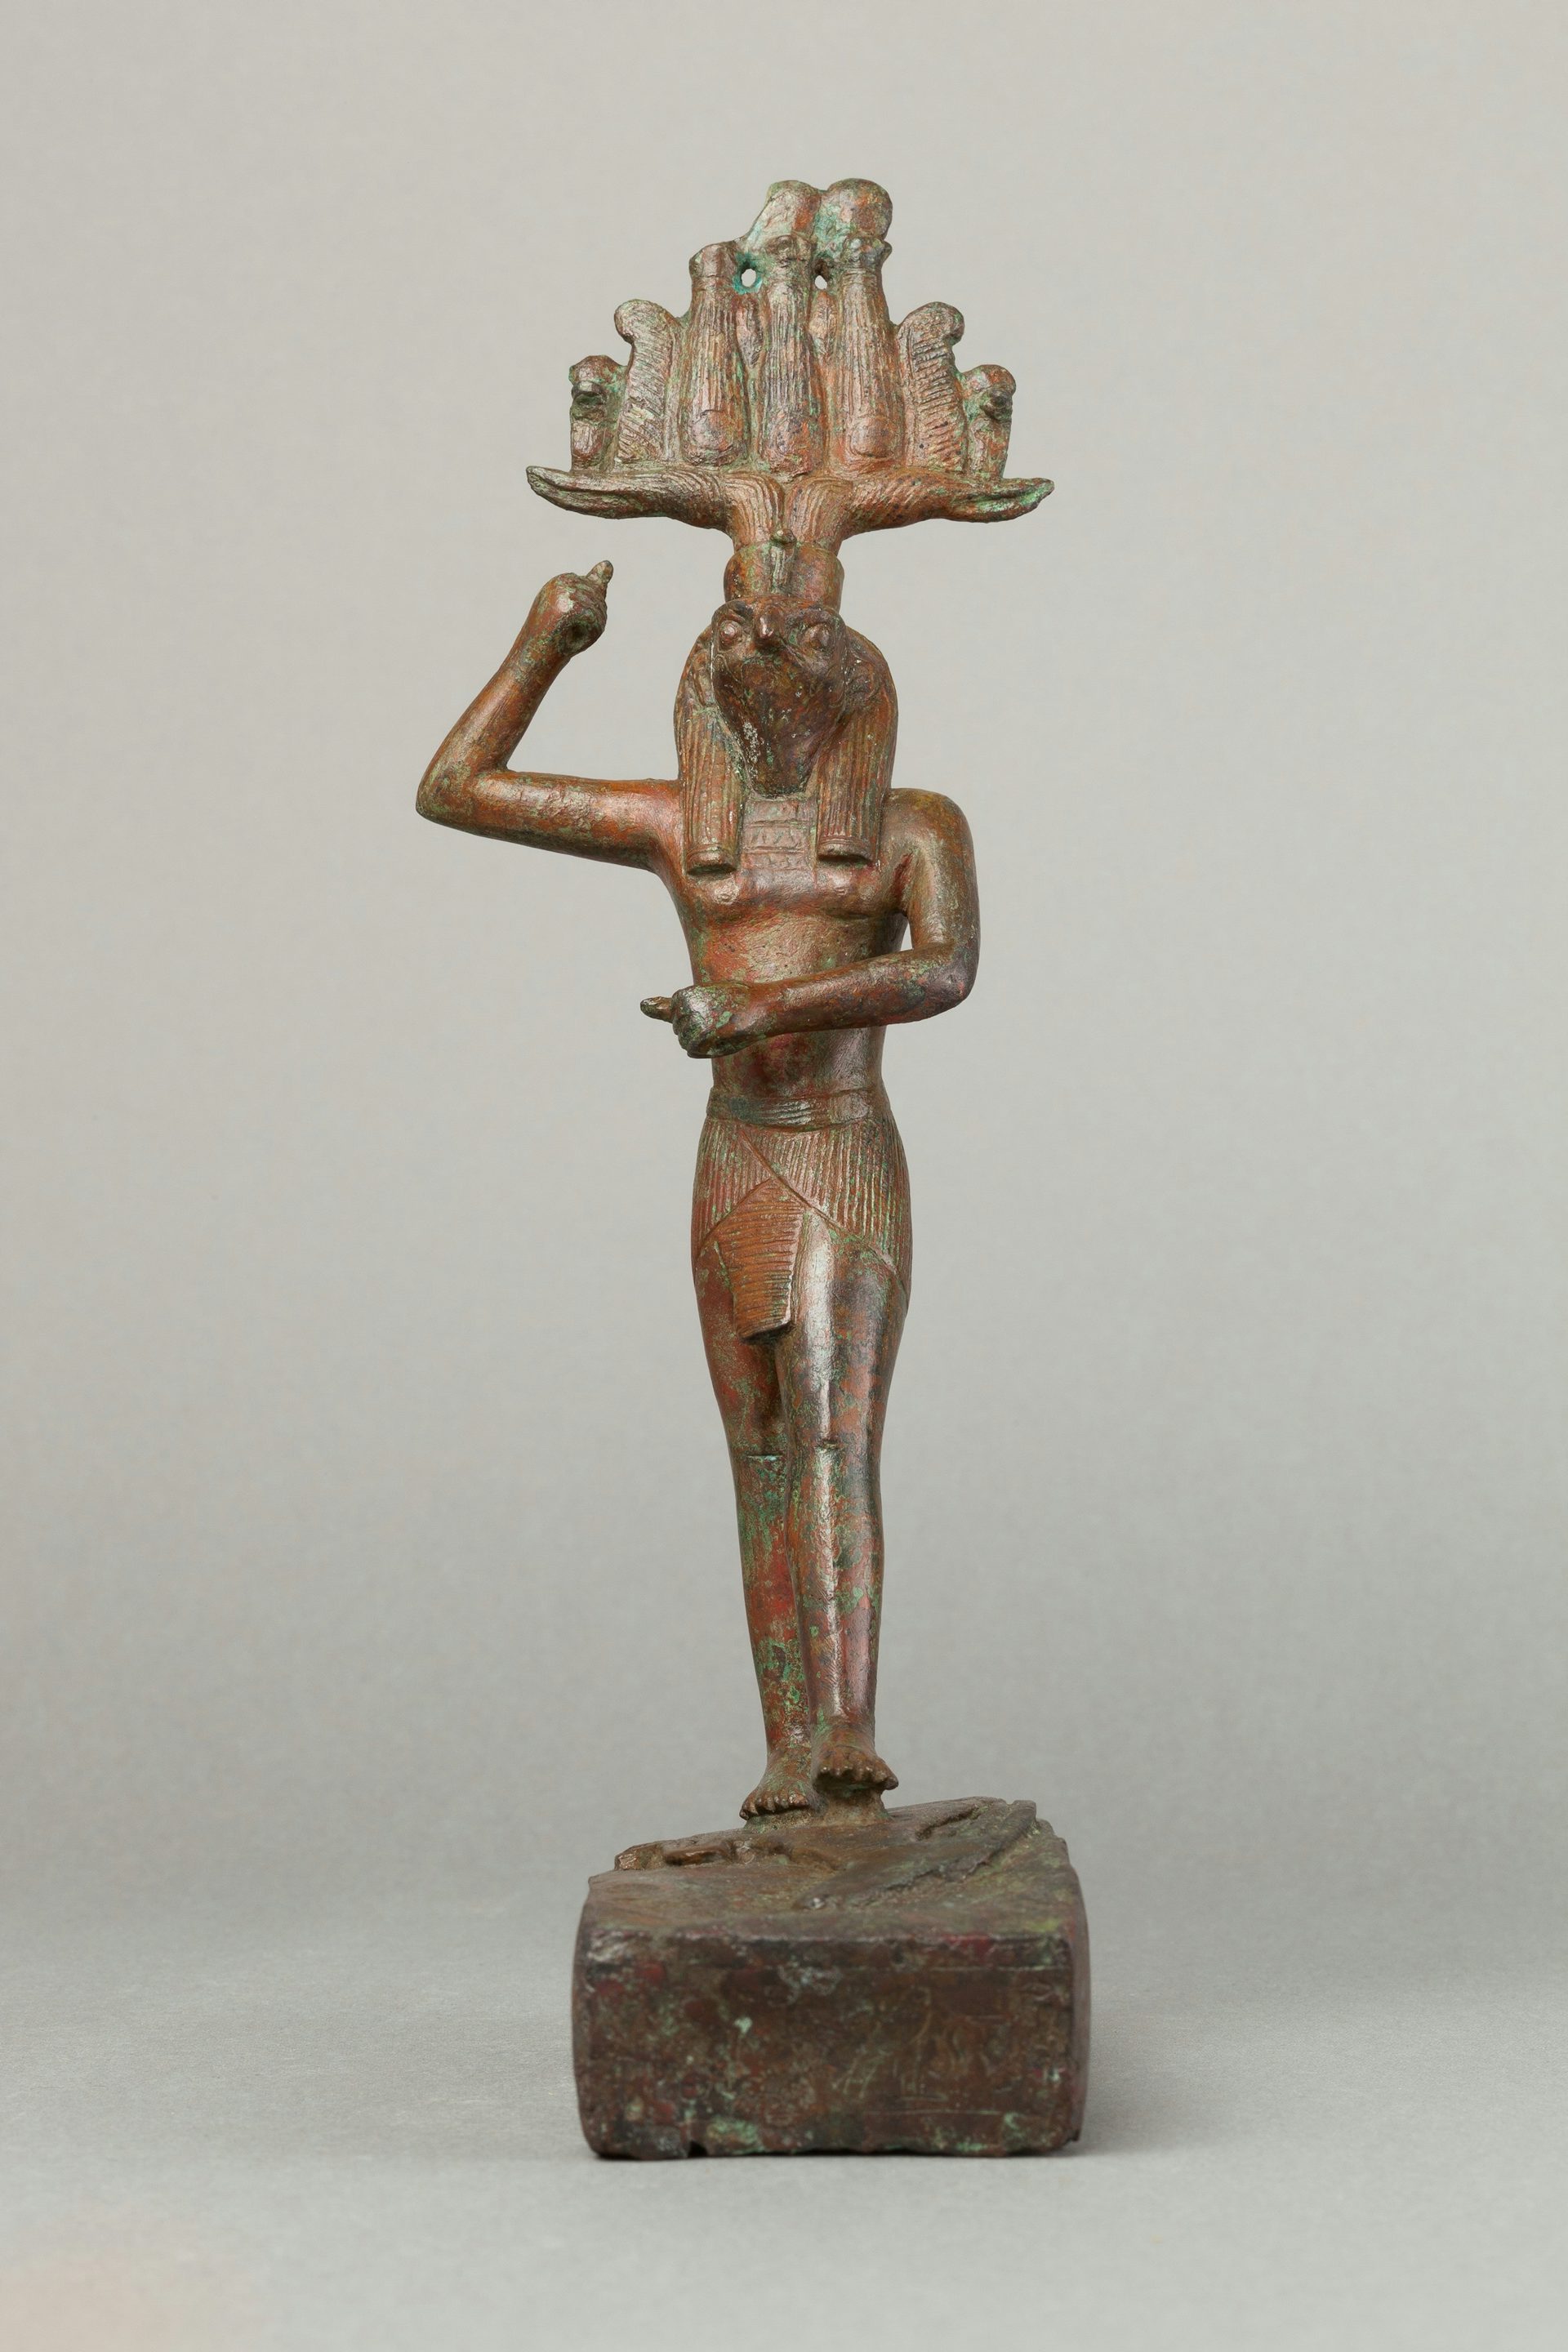 statuette of Horus spearing an antelope (664–525 BCE)